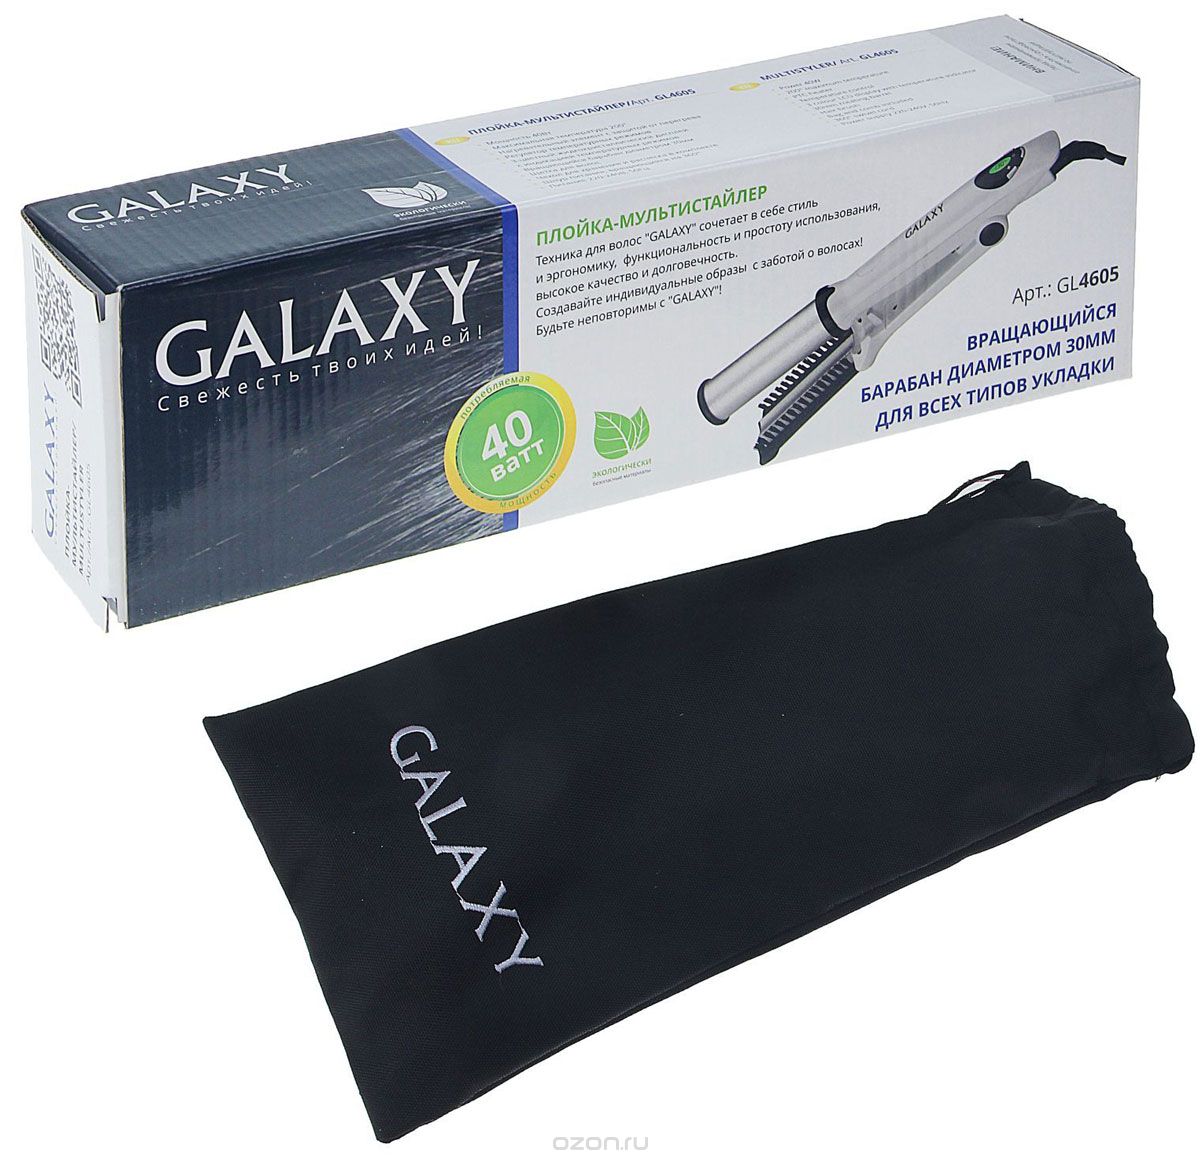    Galaxy GL 4605, White